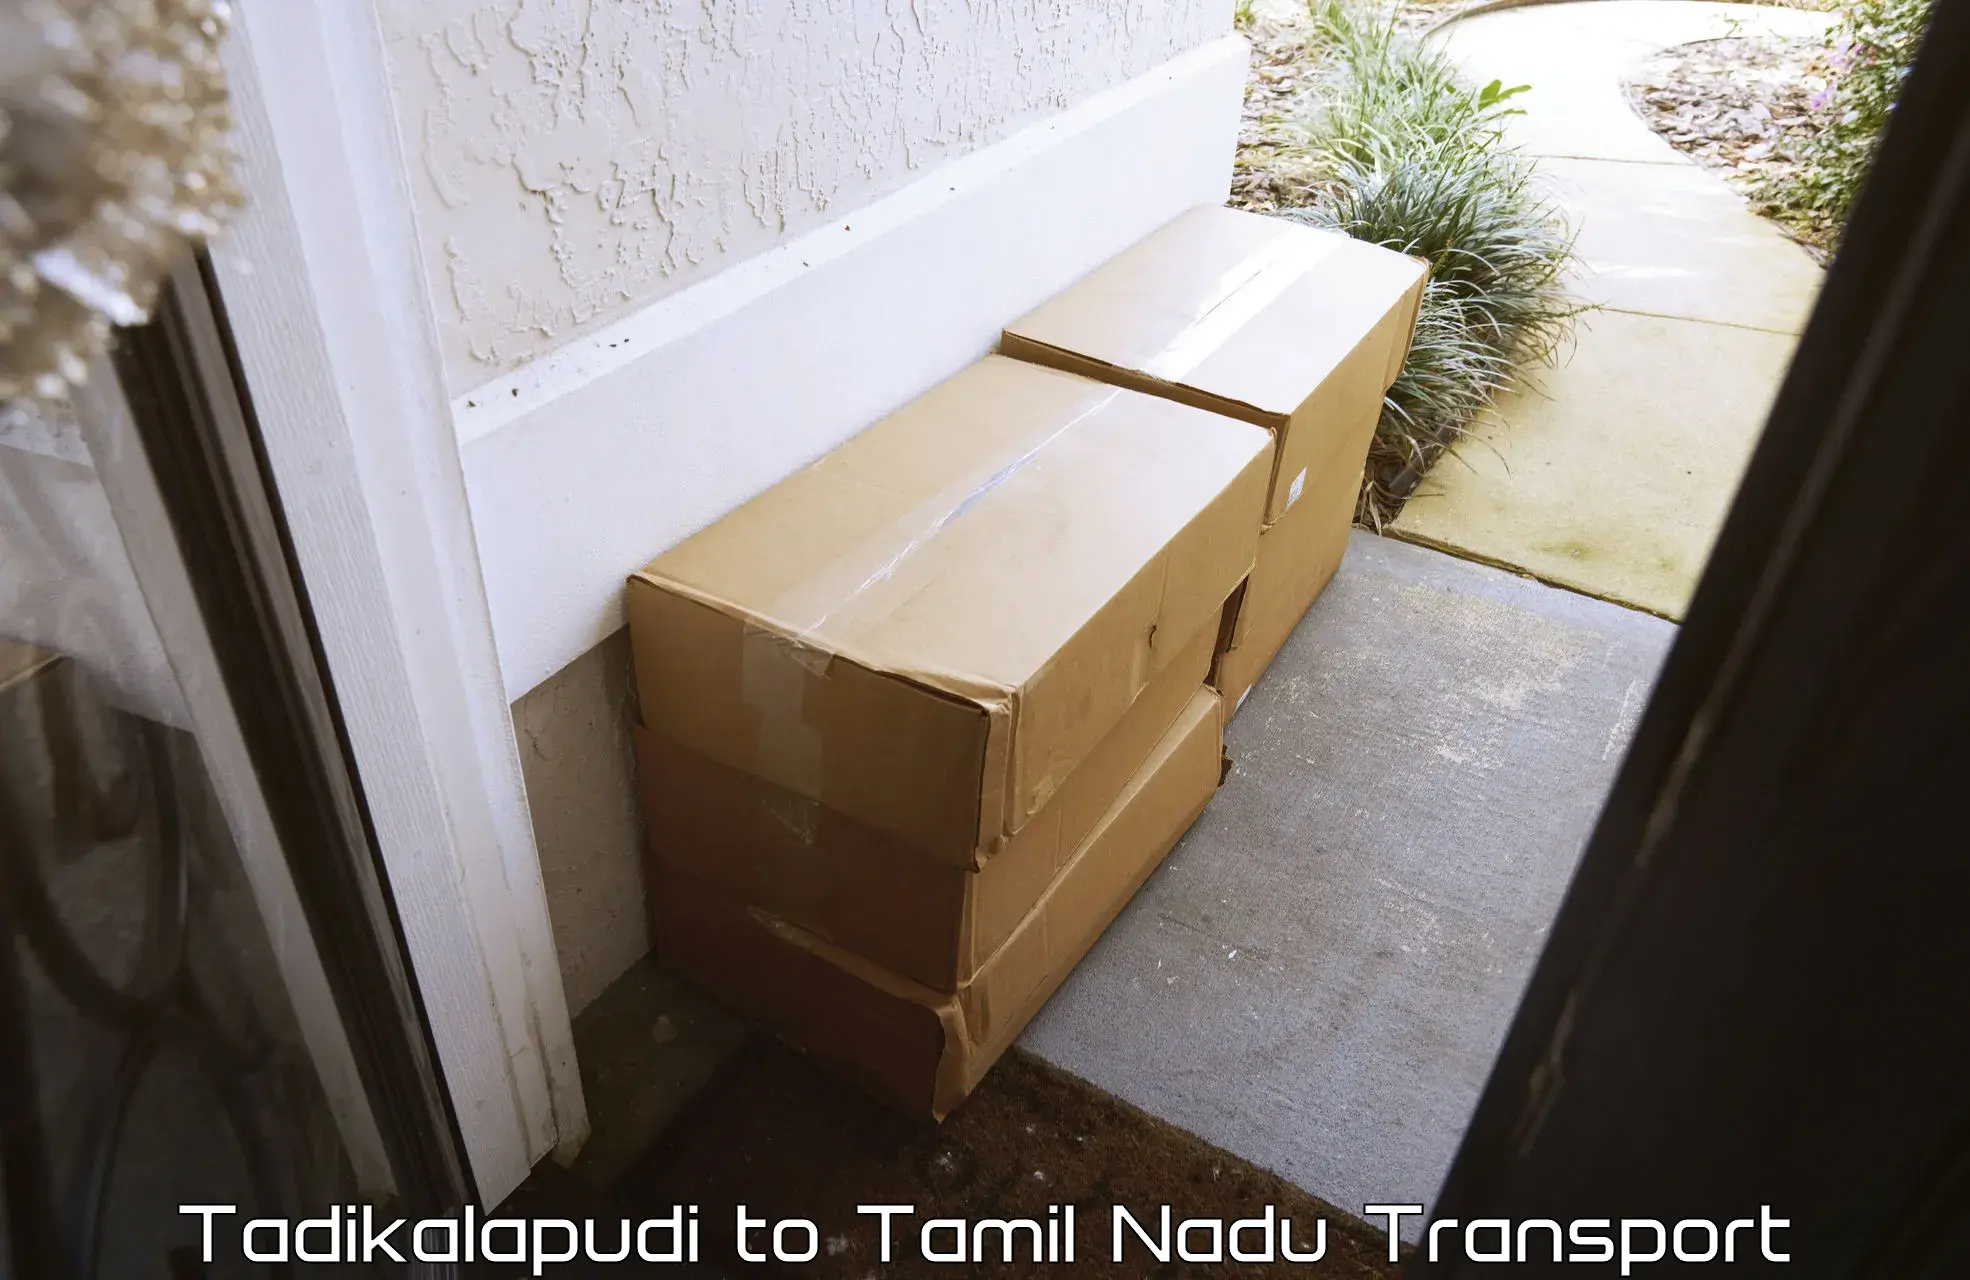 Commercial transport service Tadikalapudi to Coimbatore